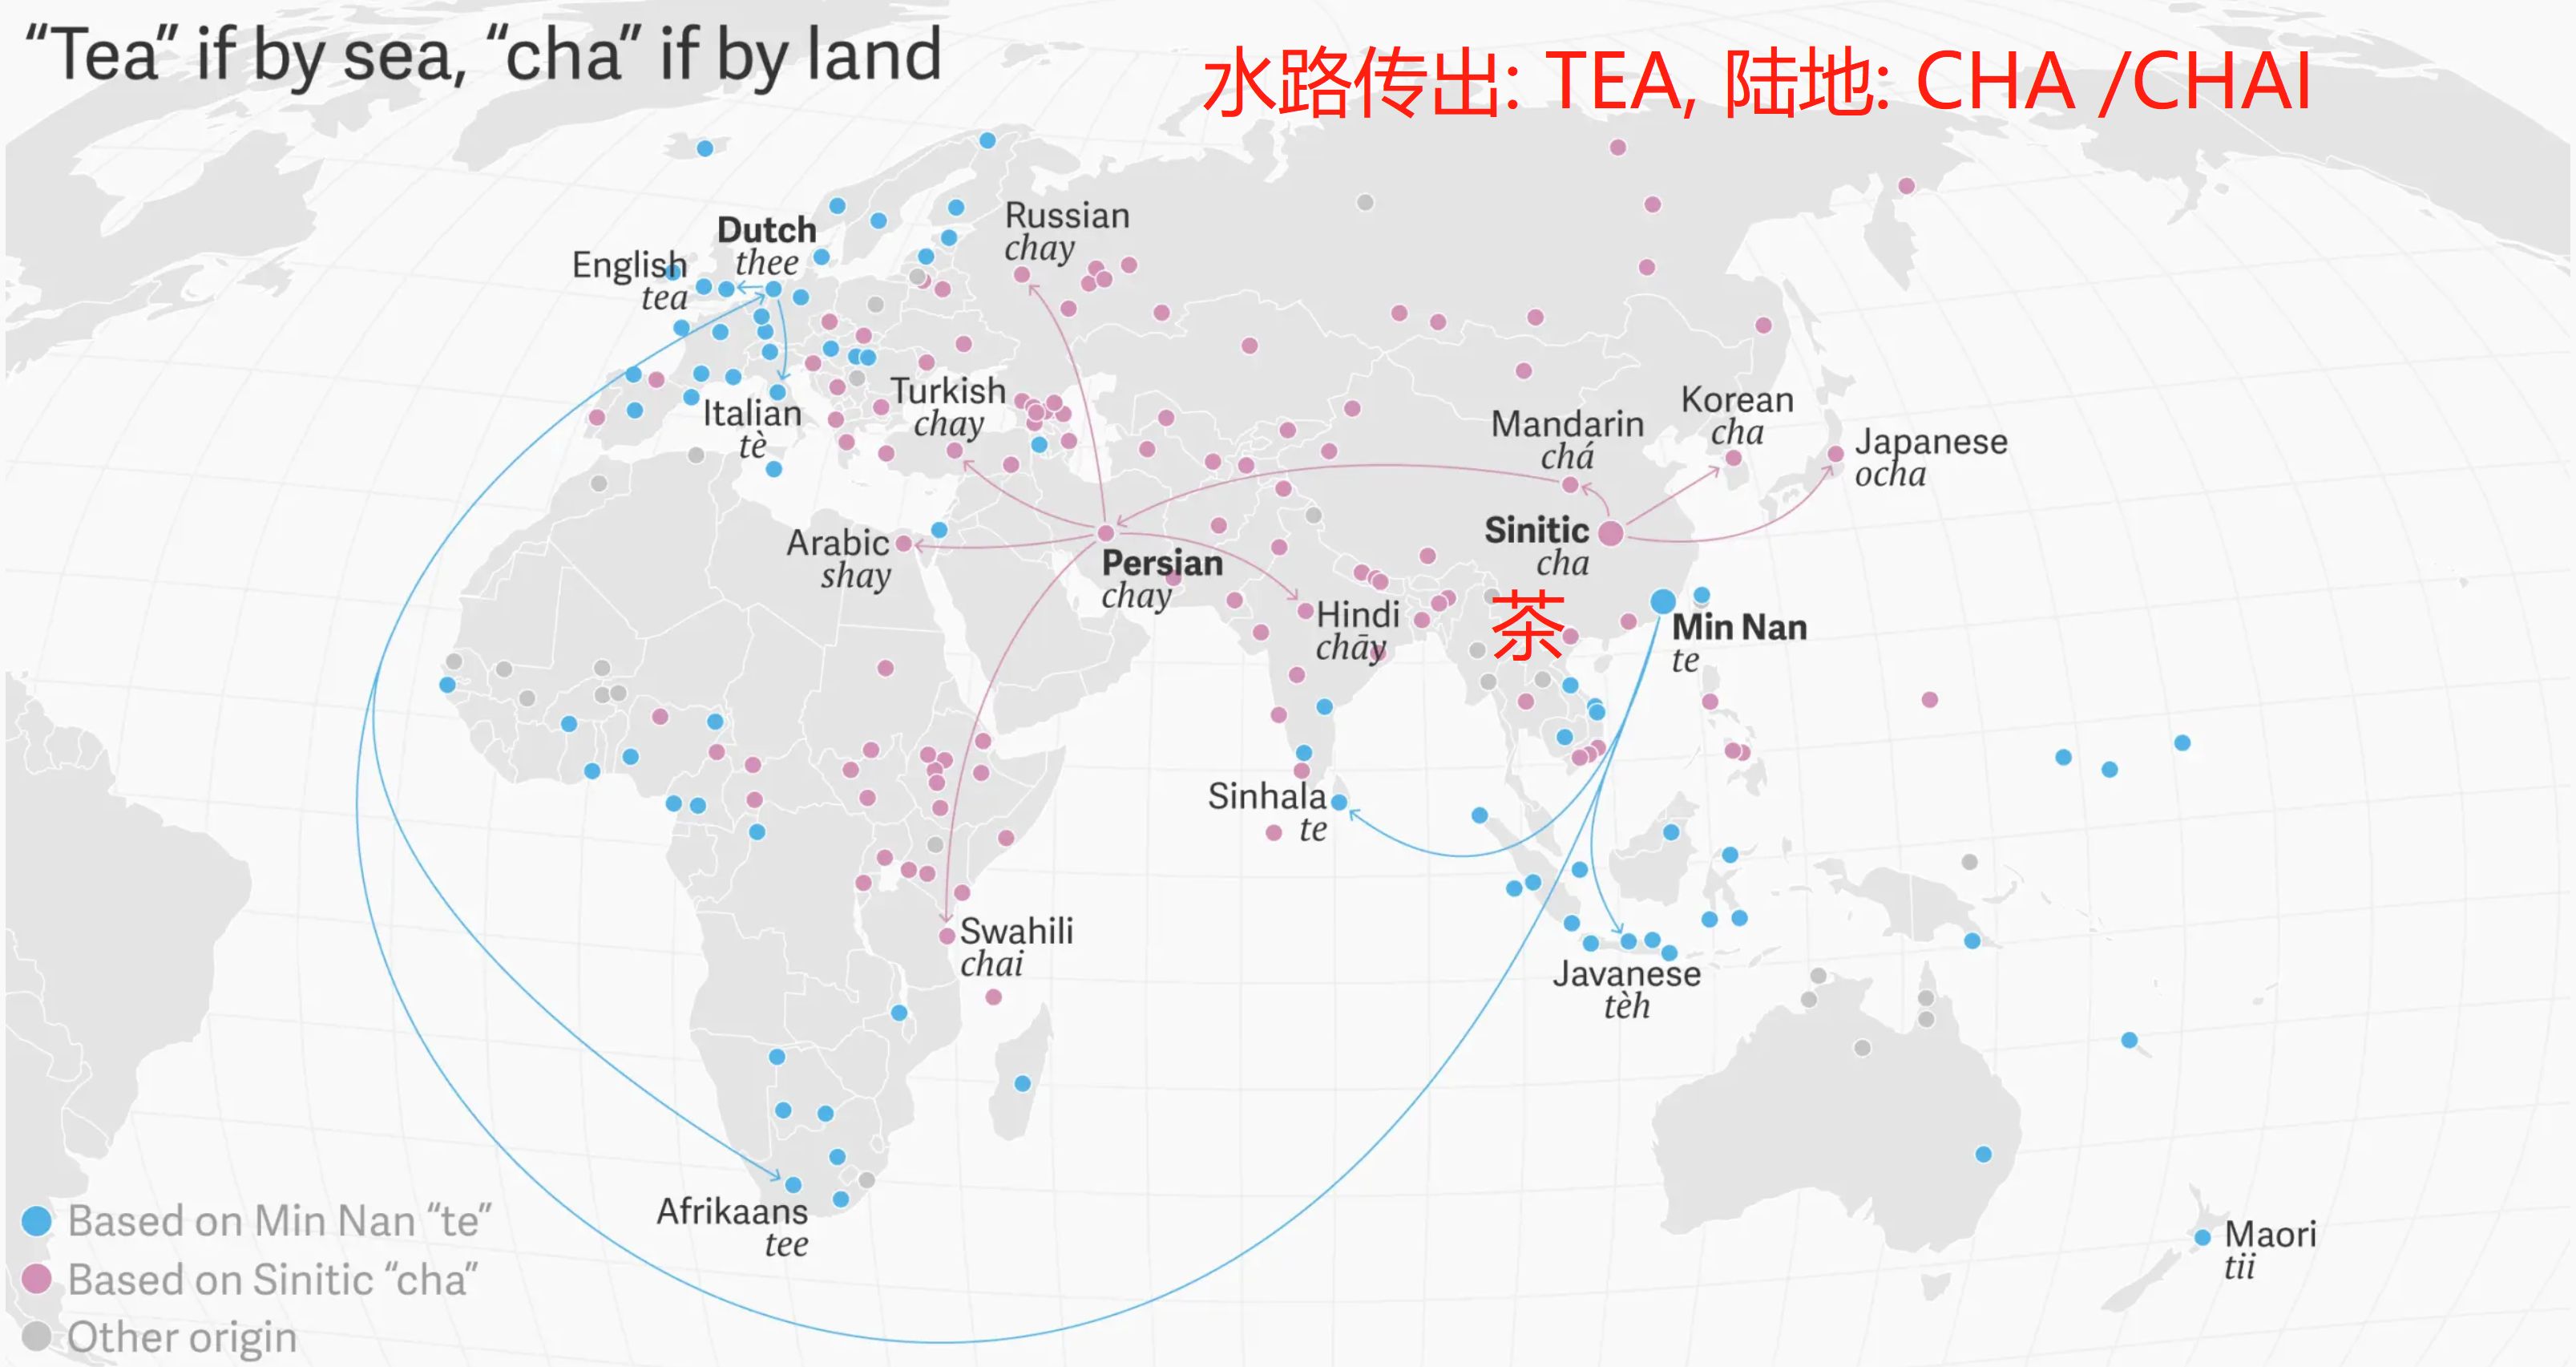 Tea' globalization path